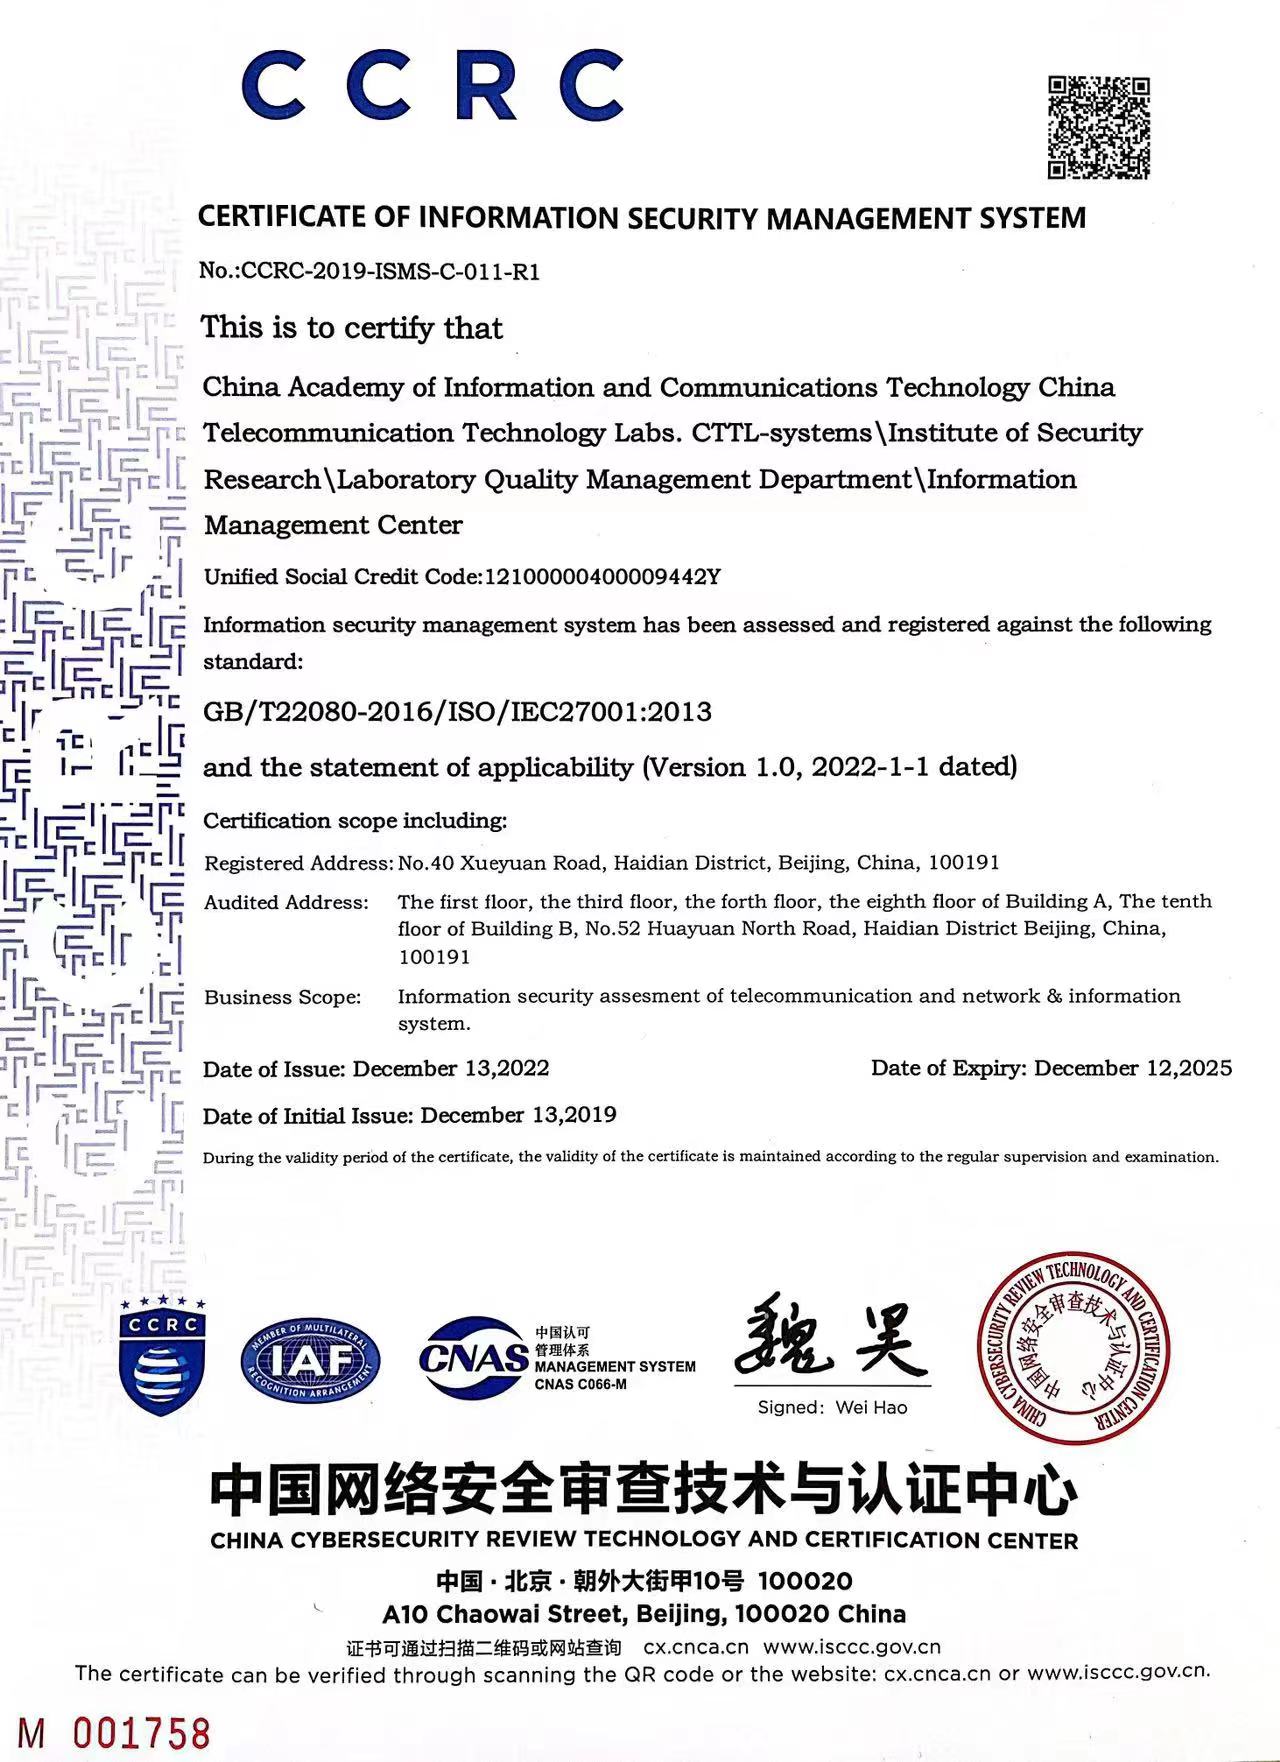 CCRC信息安全体系证书-英文.jpg